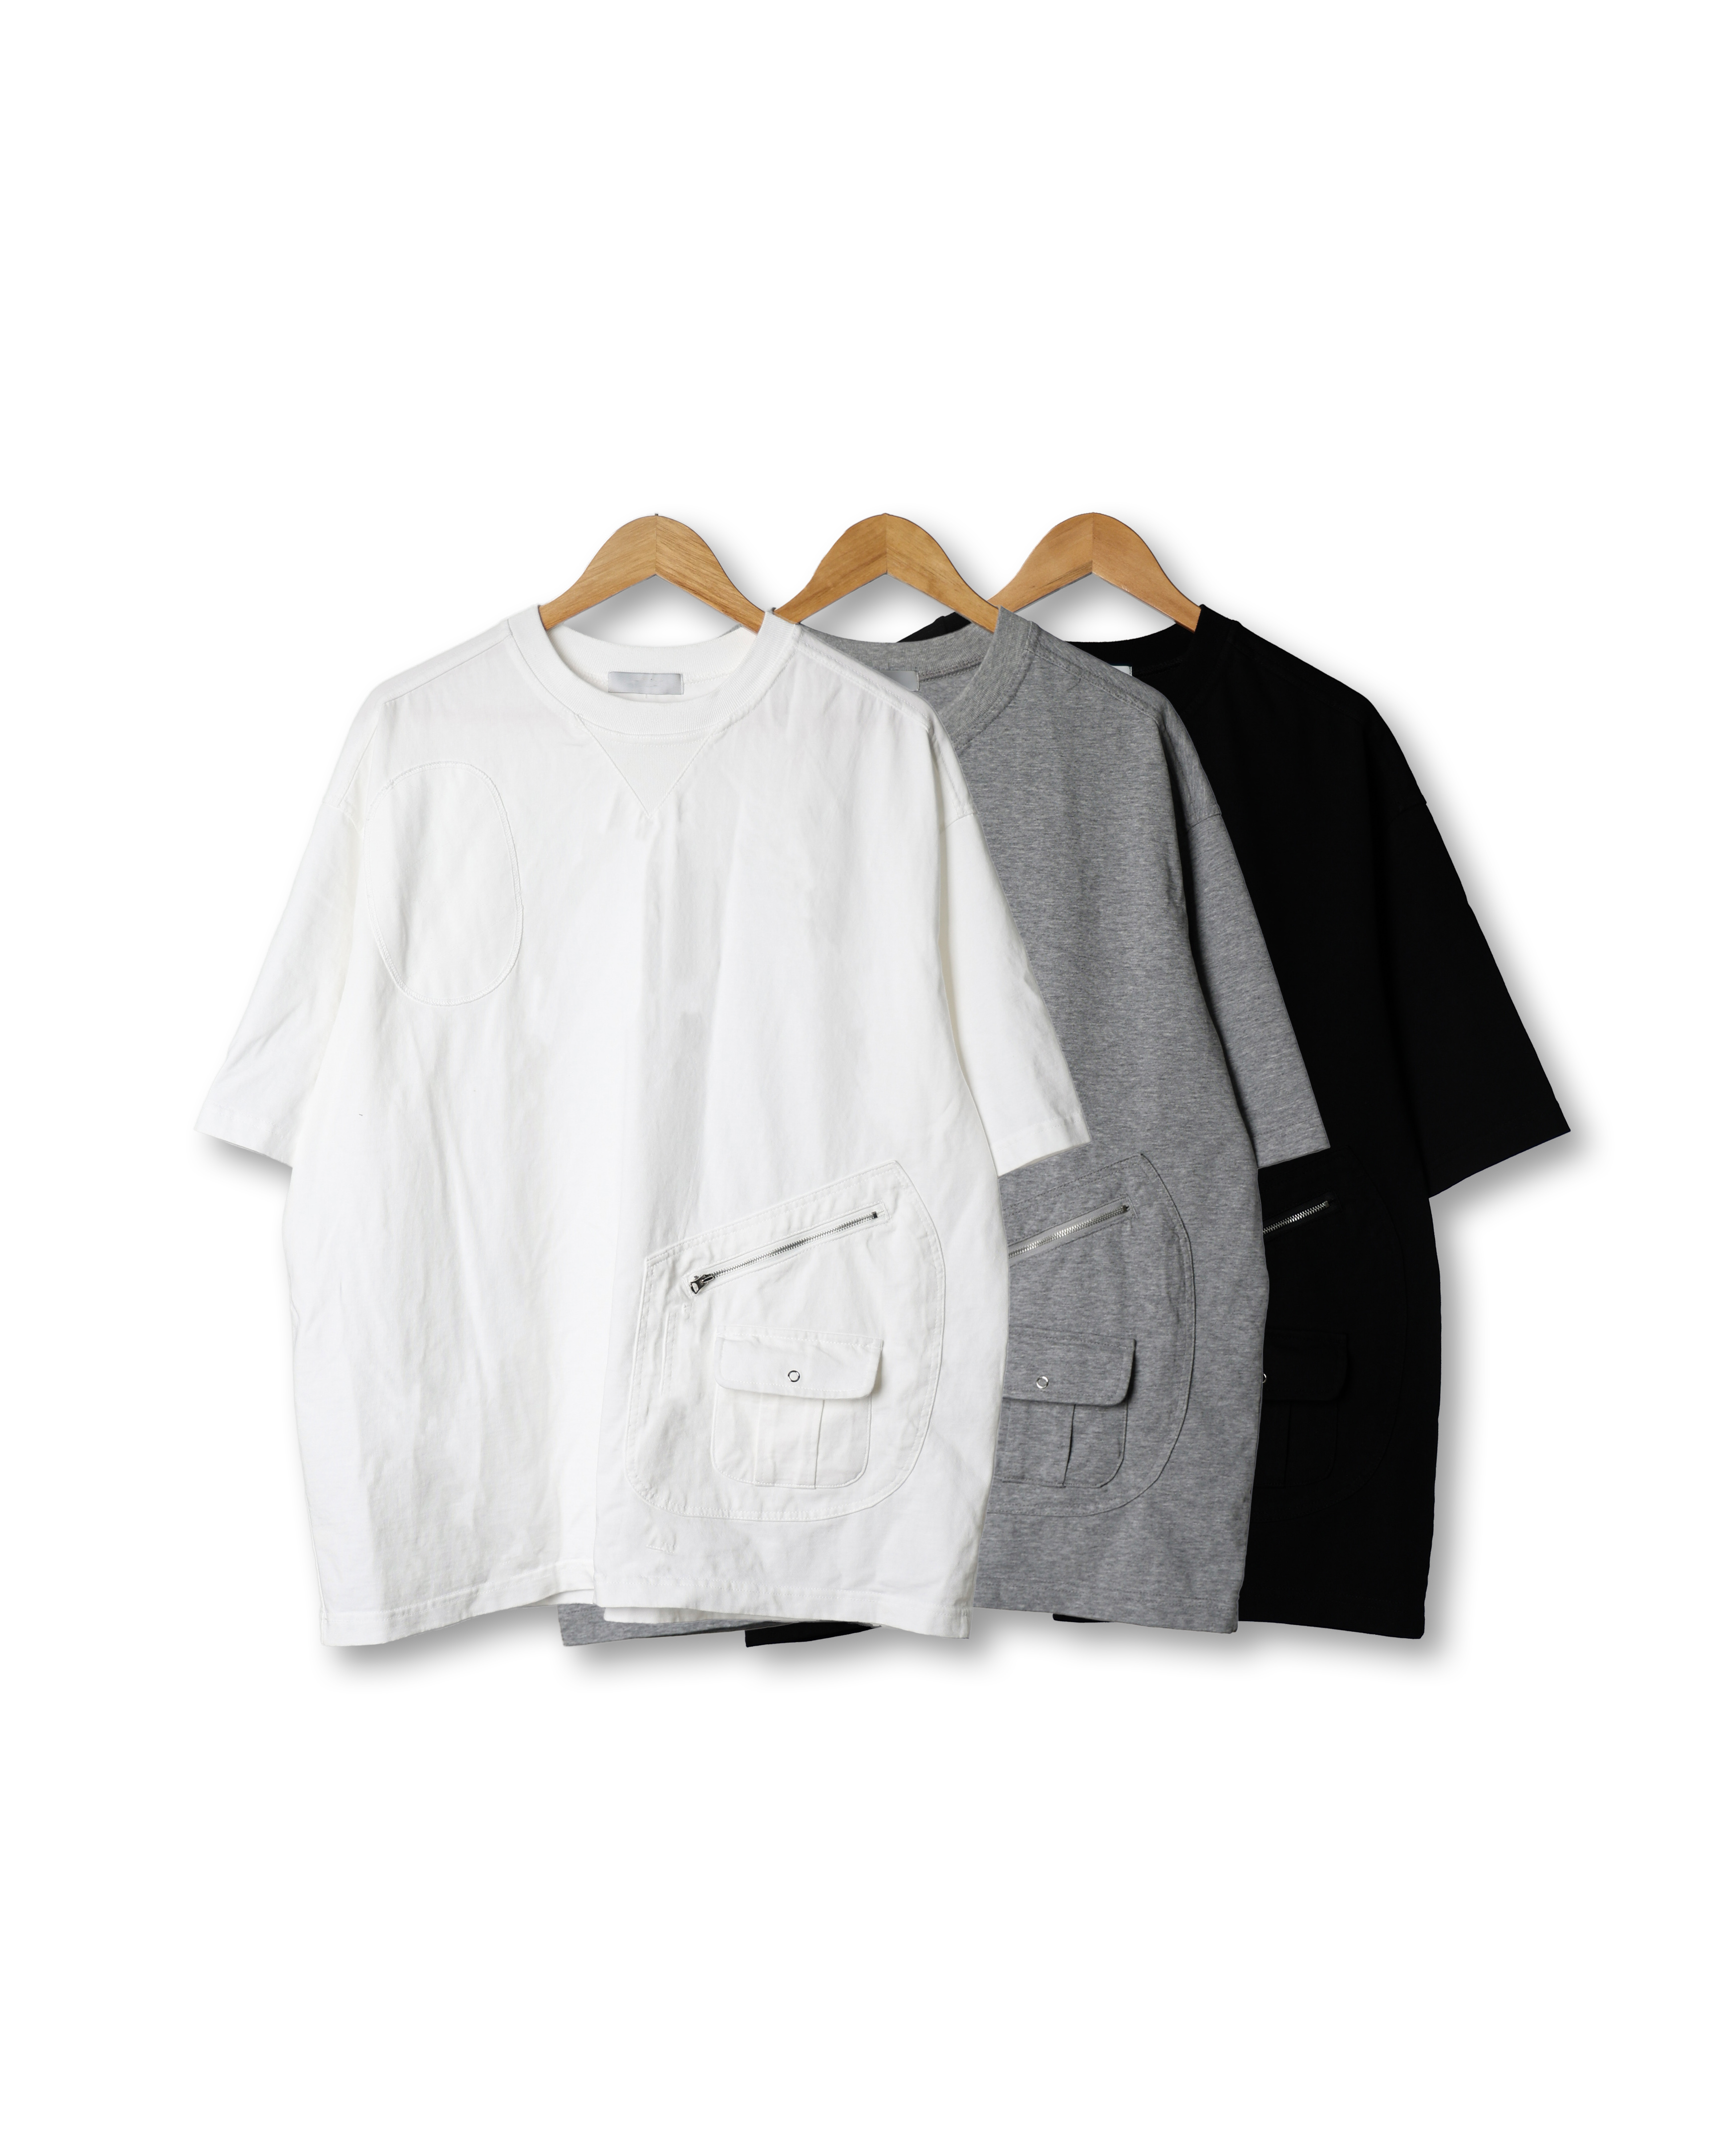 SPET Oversized Detailing Zip T Shirts (Black/Gray/Ivory)